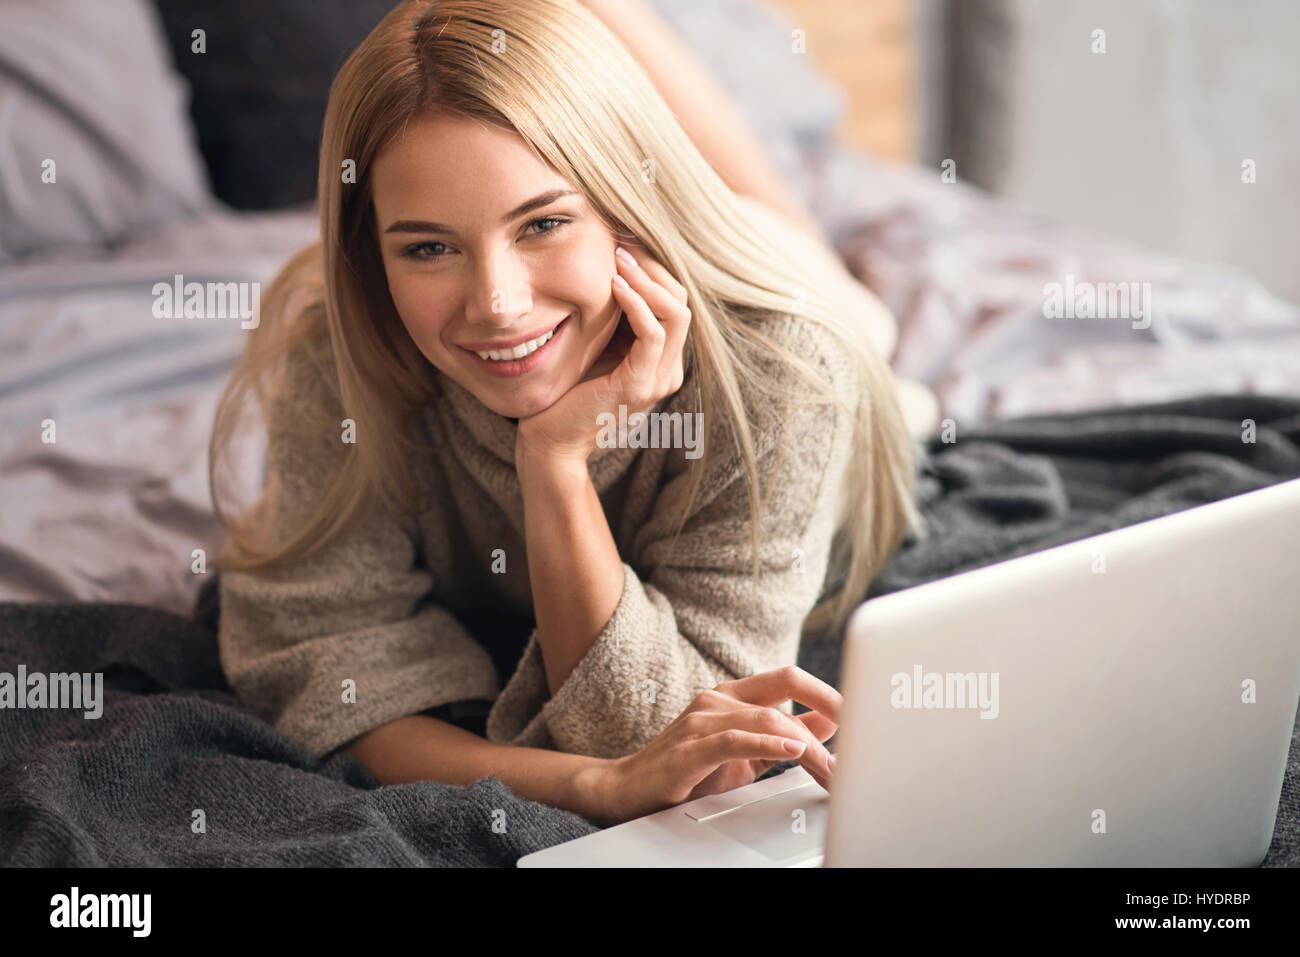 Cheerful girl enjoying freelance work at home Stock Photo